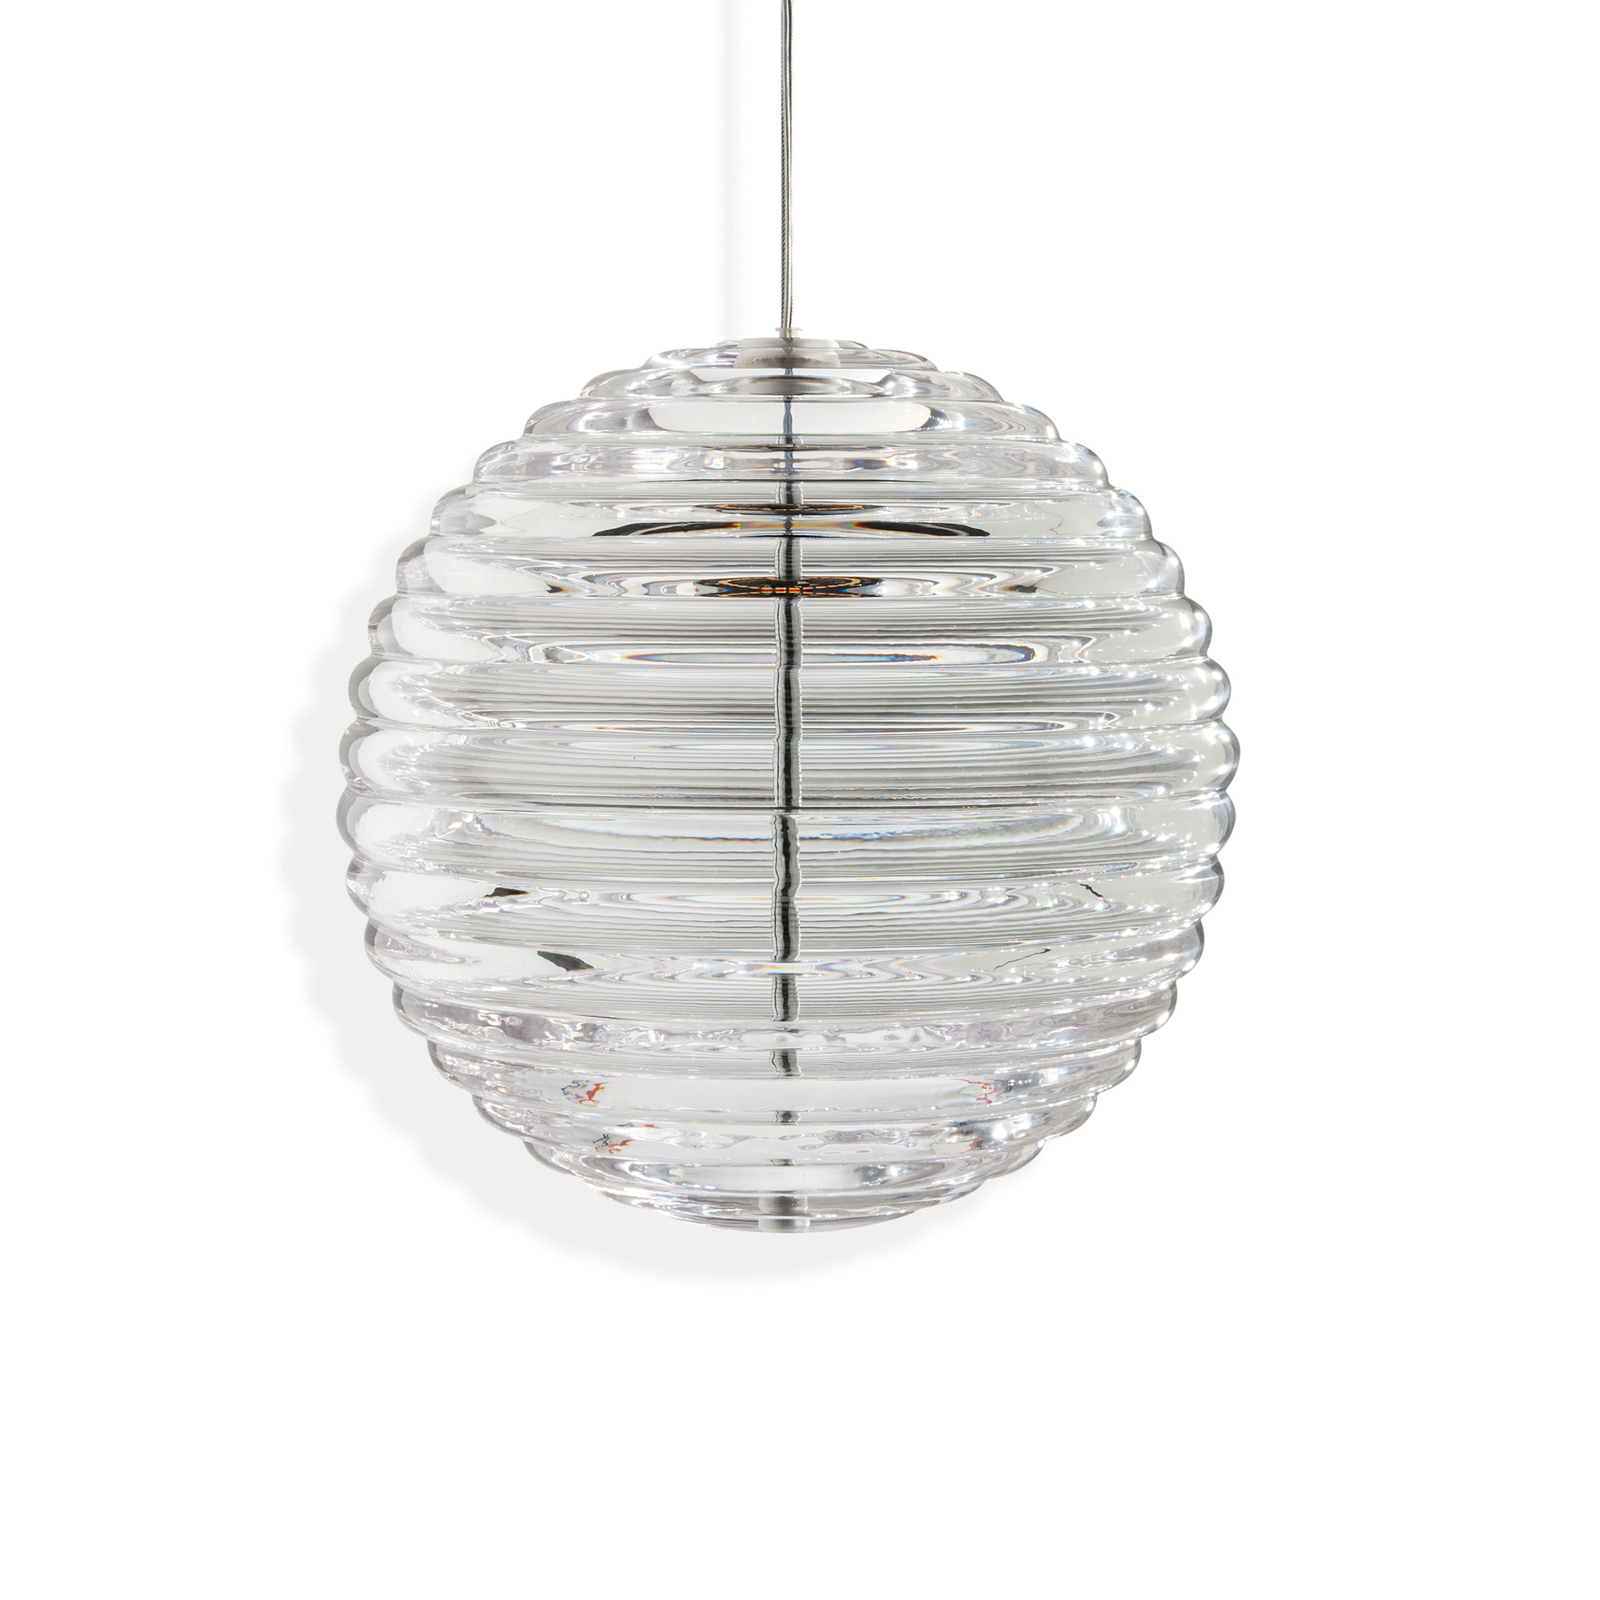 Tom Dixon Press Sphere LED hanging light